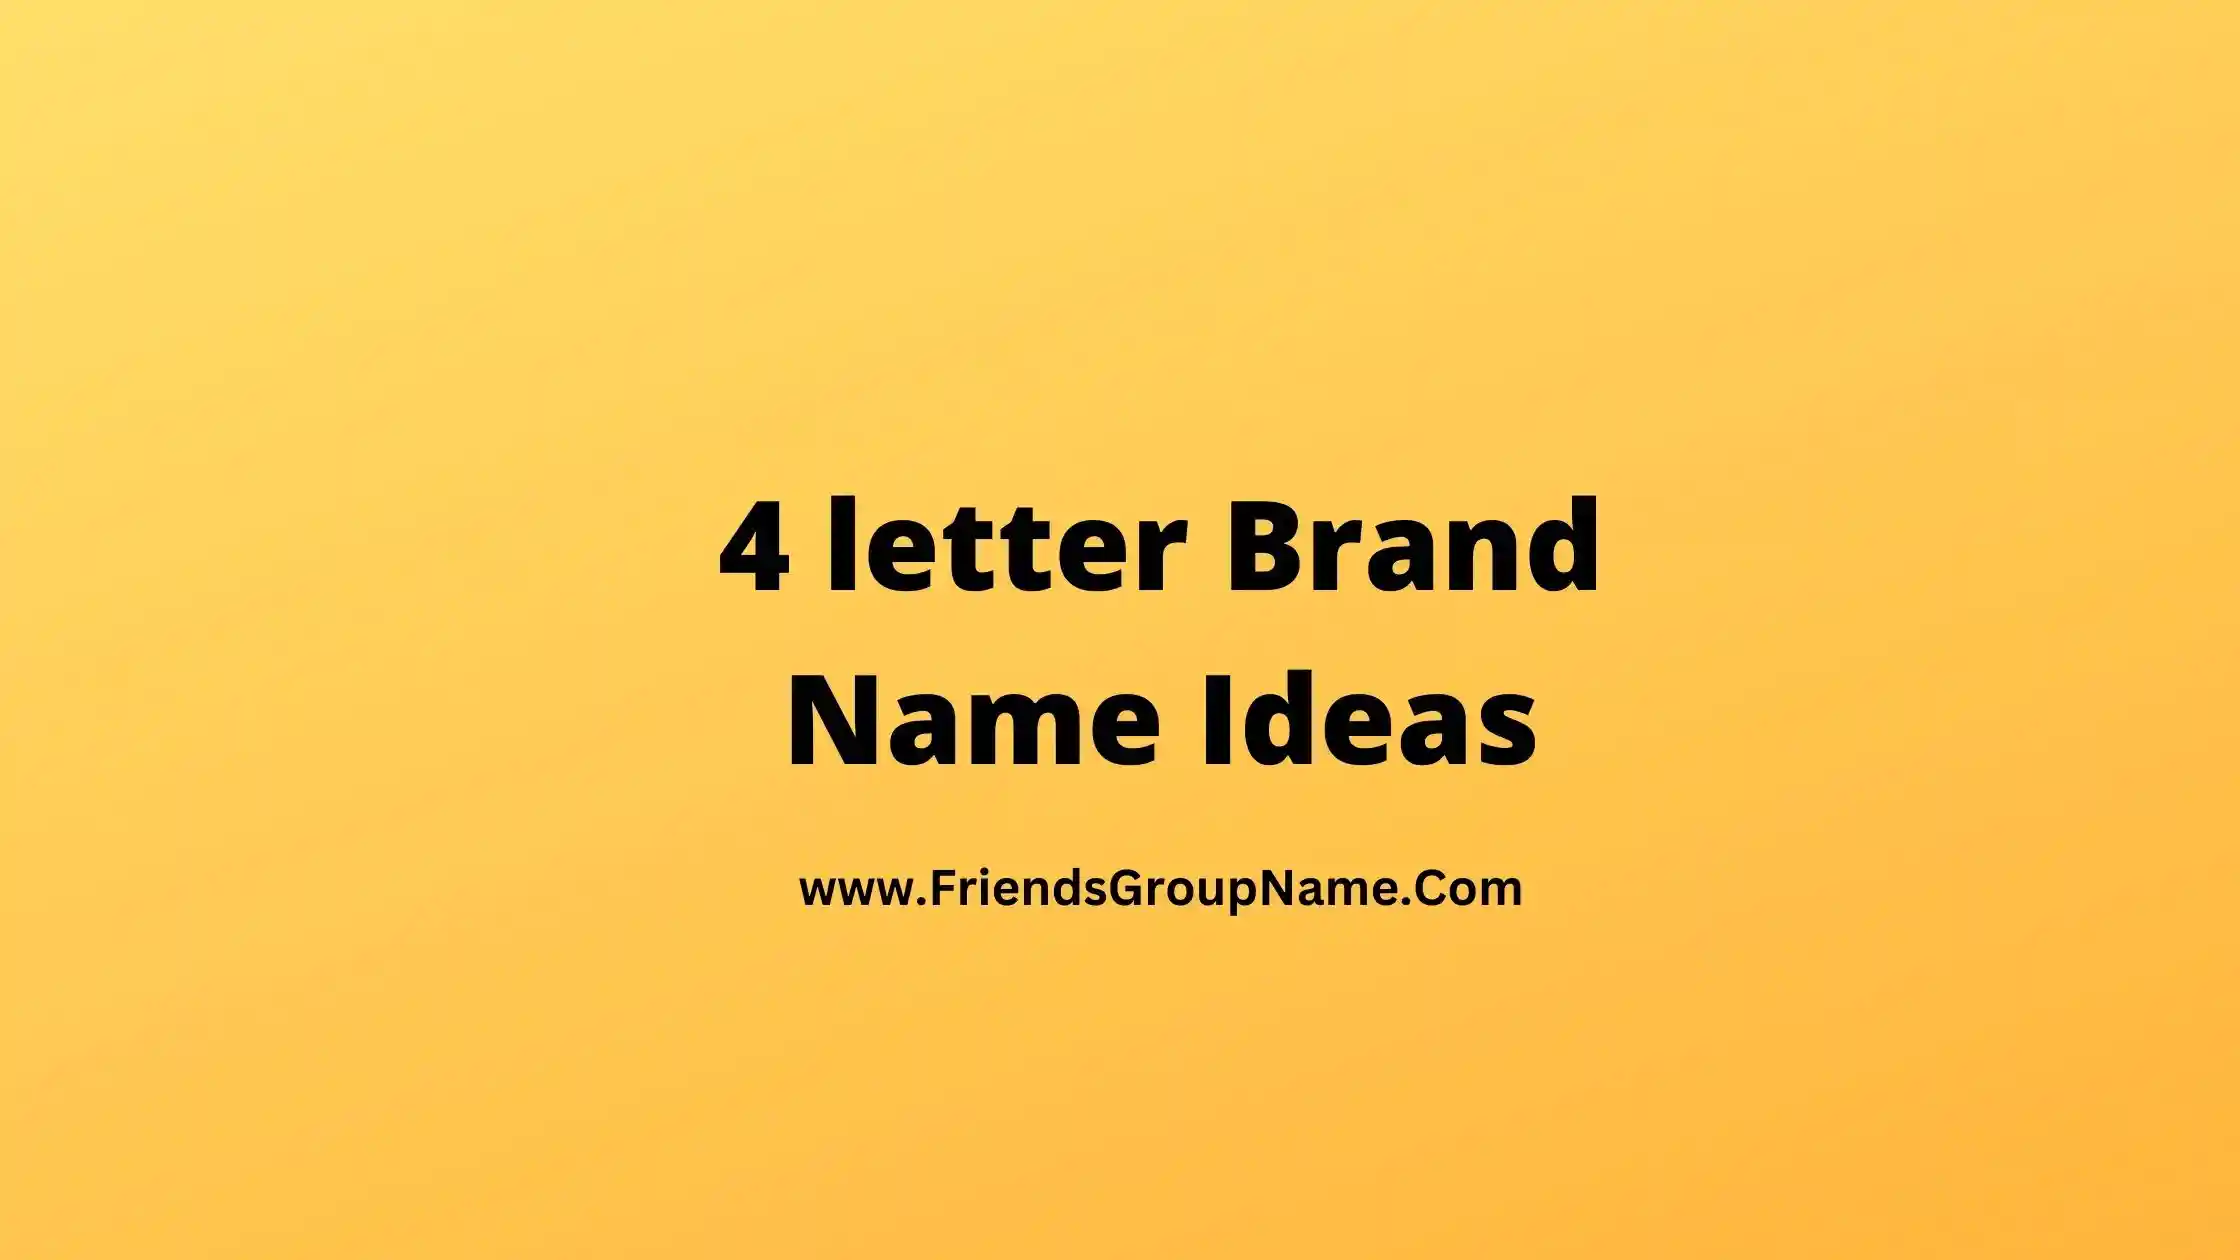 4 letter Brand Name Ideas